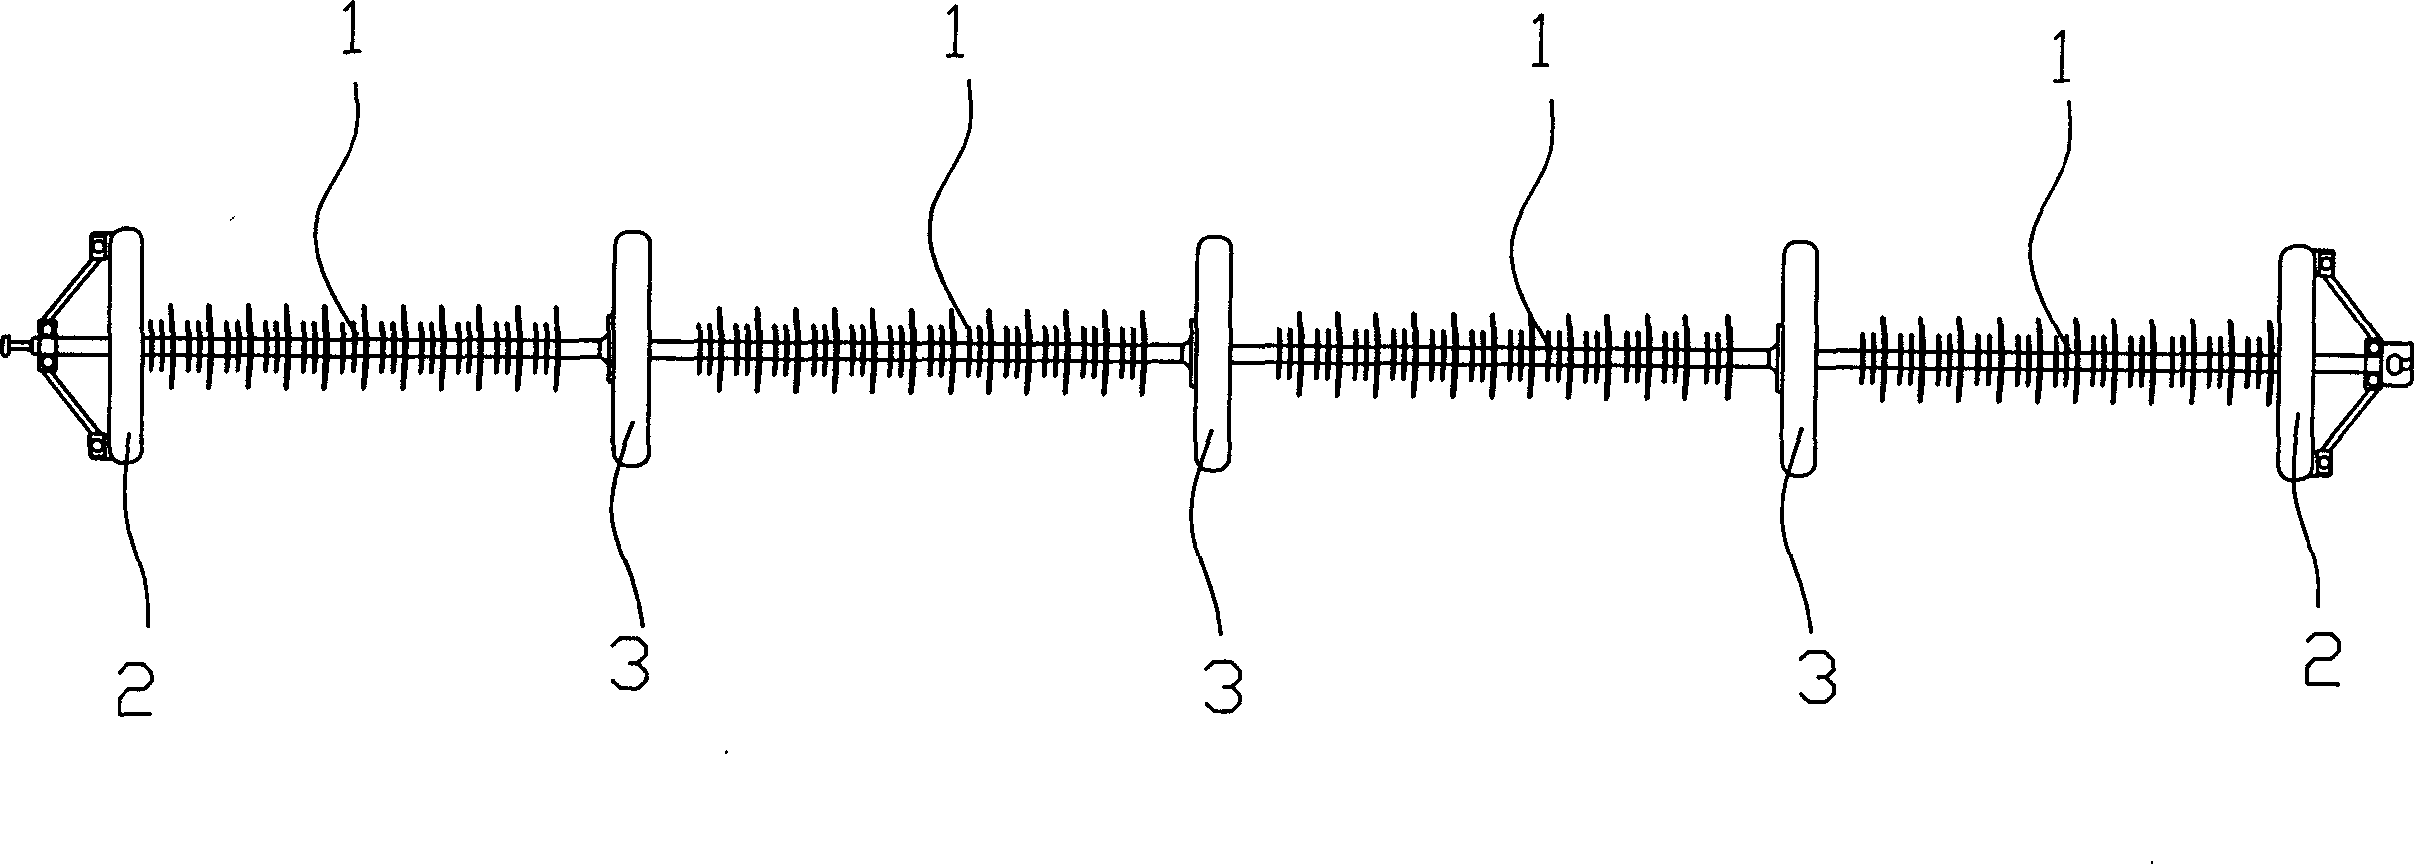 Capacity uniform voltage type stick shape suspending composite insulator